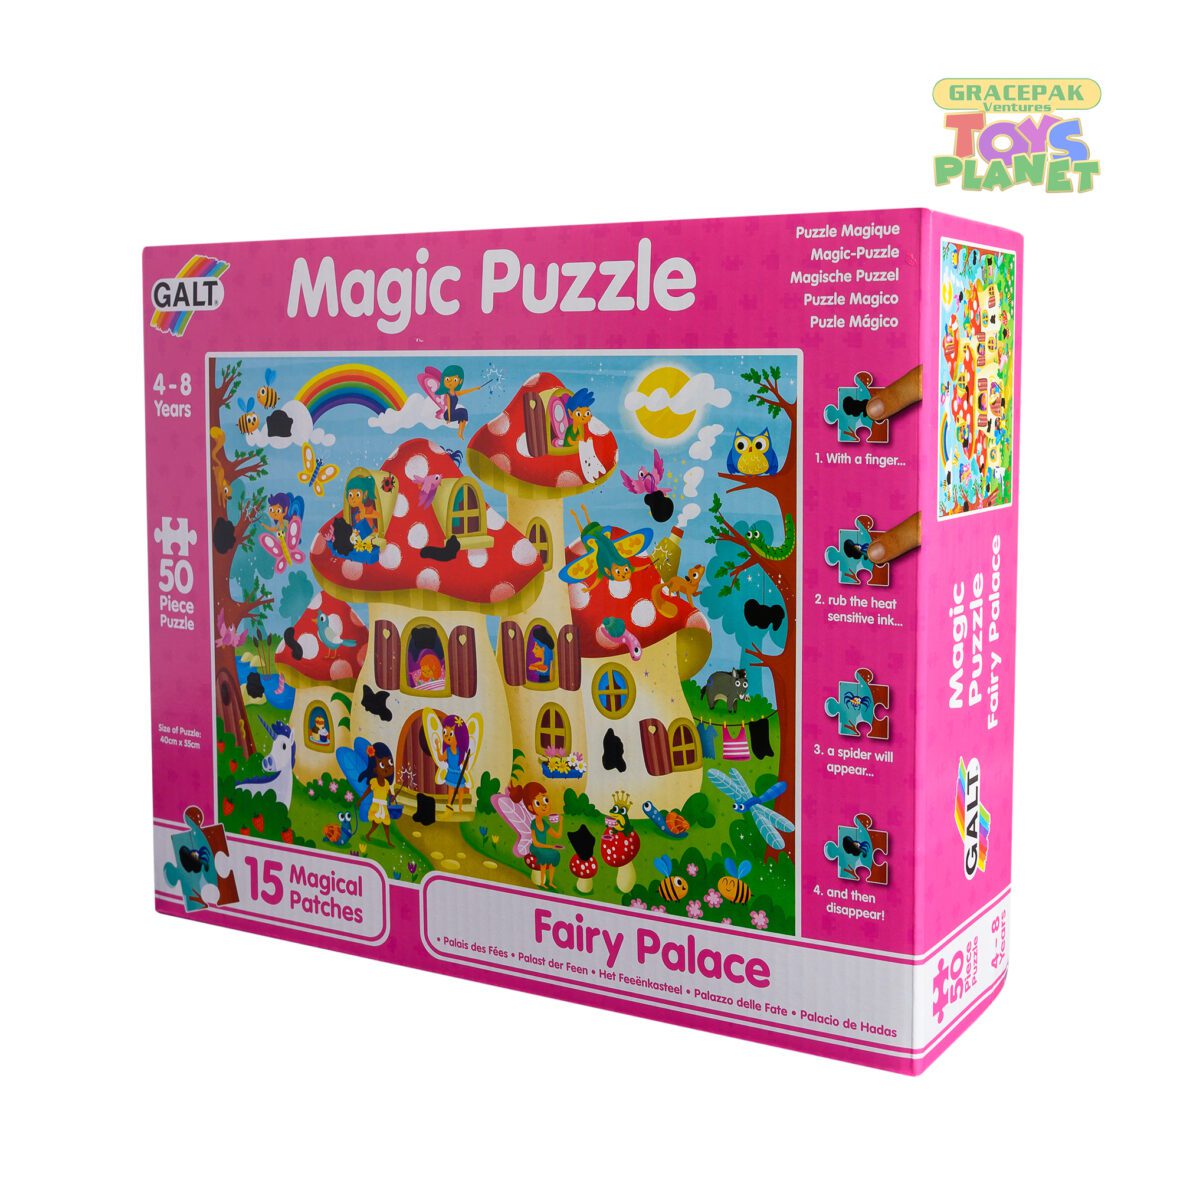 GALT_Fairy Palace Magic Puzzle_3